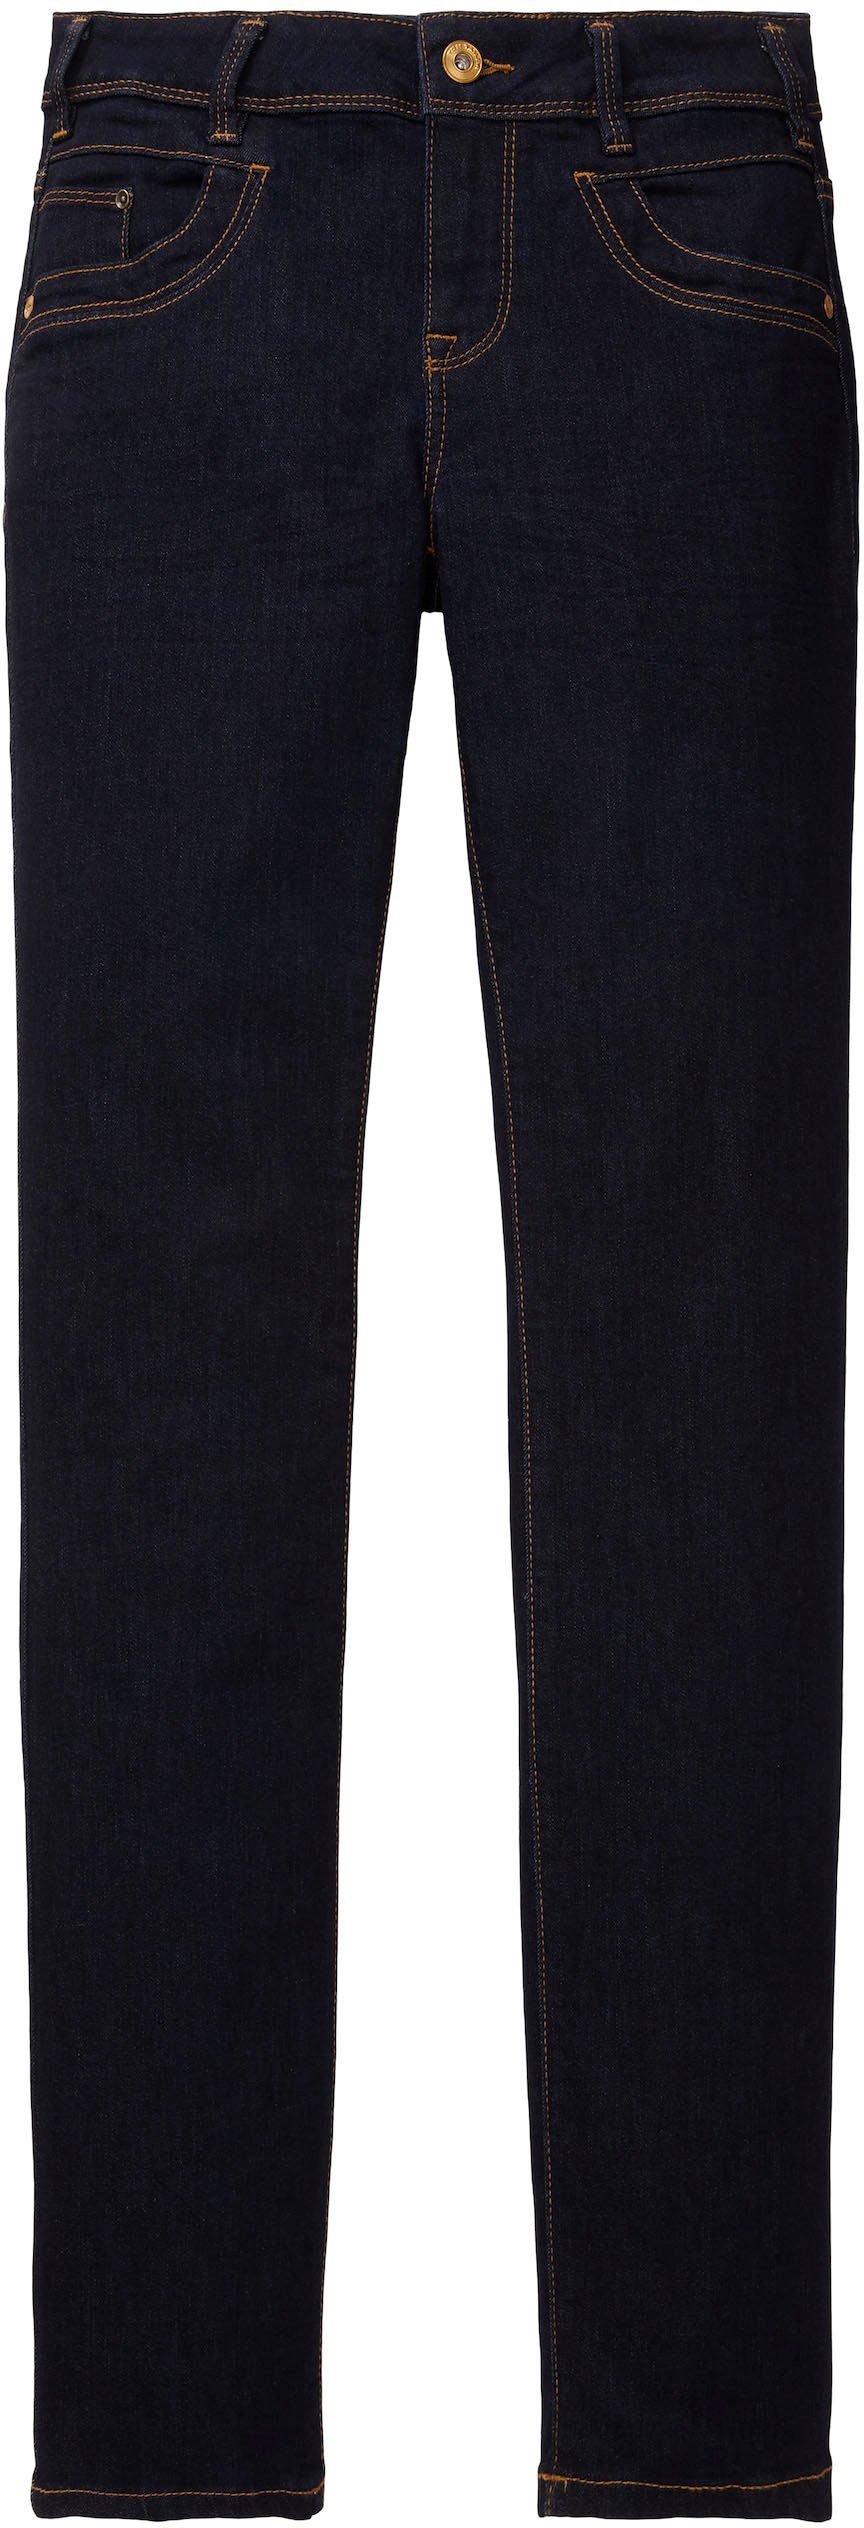 Gerade blue Jeans Kontrastnähten TAILOR denim TOM mit rinsed